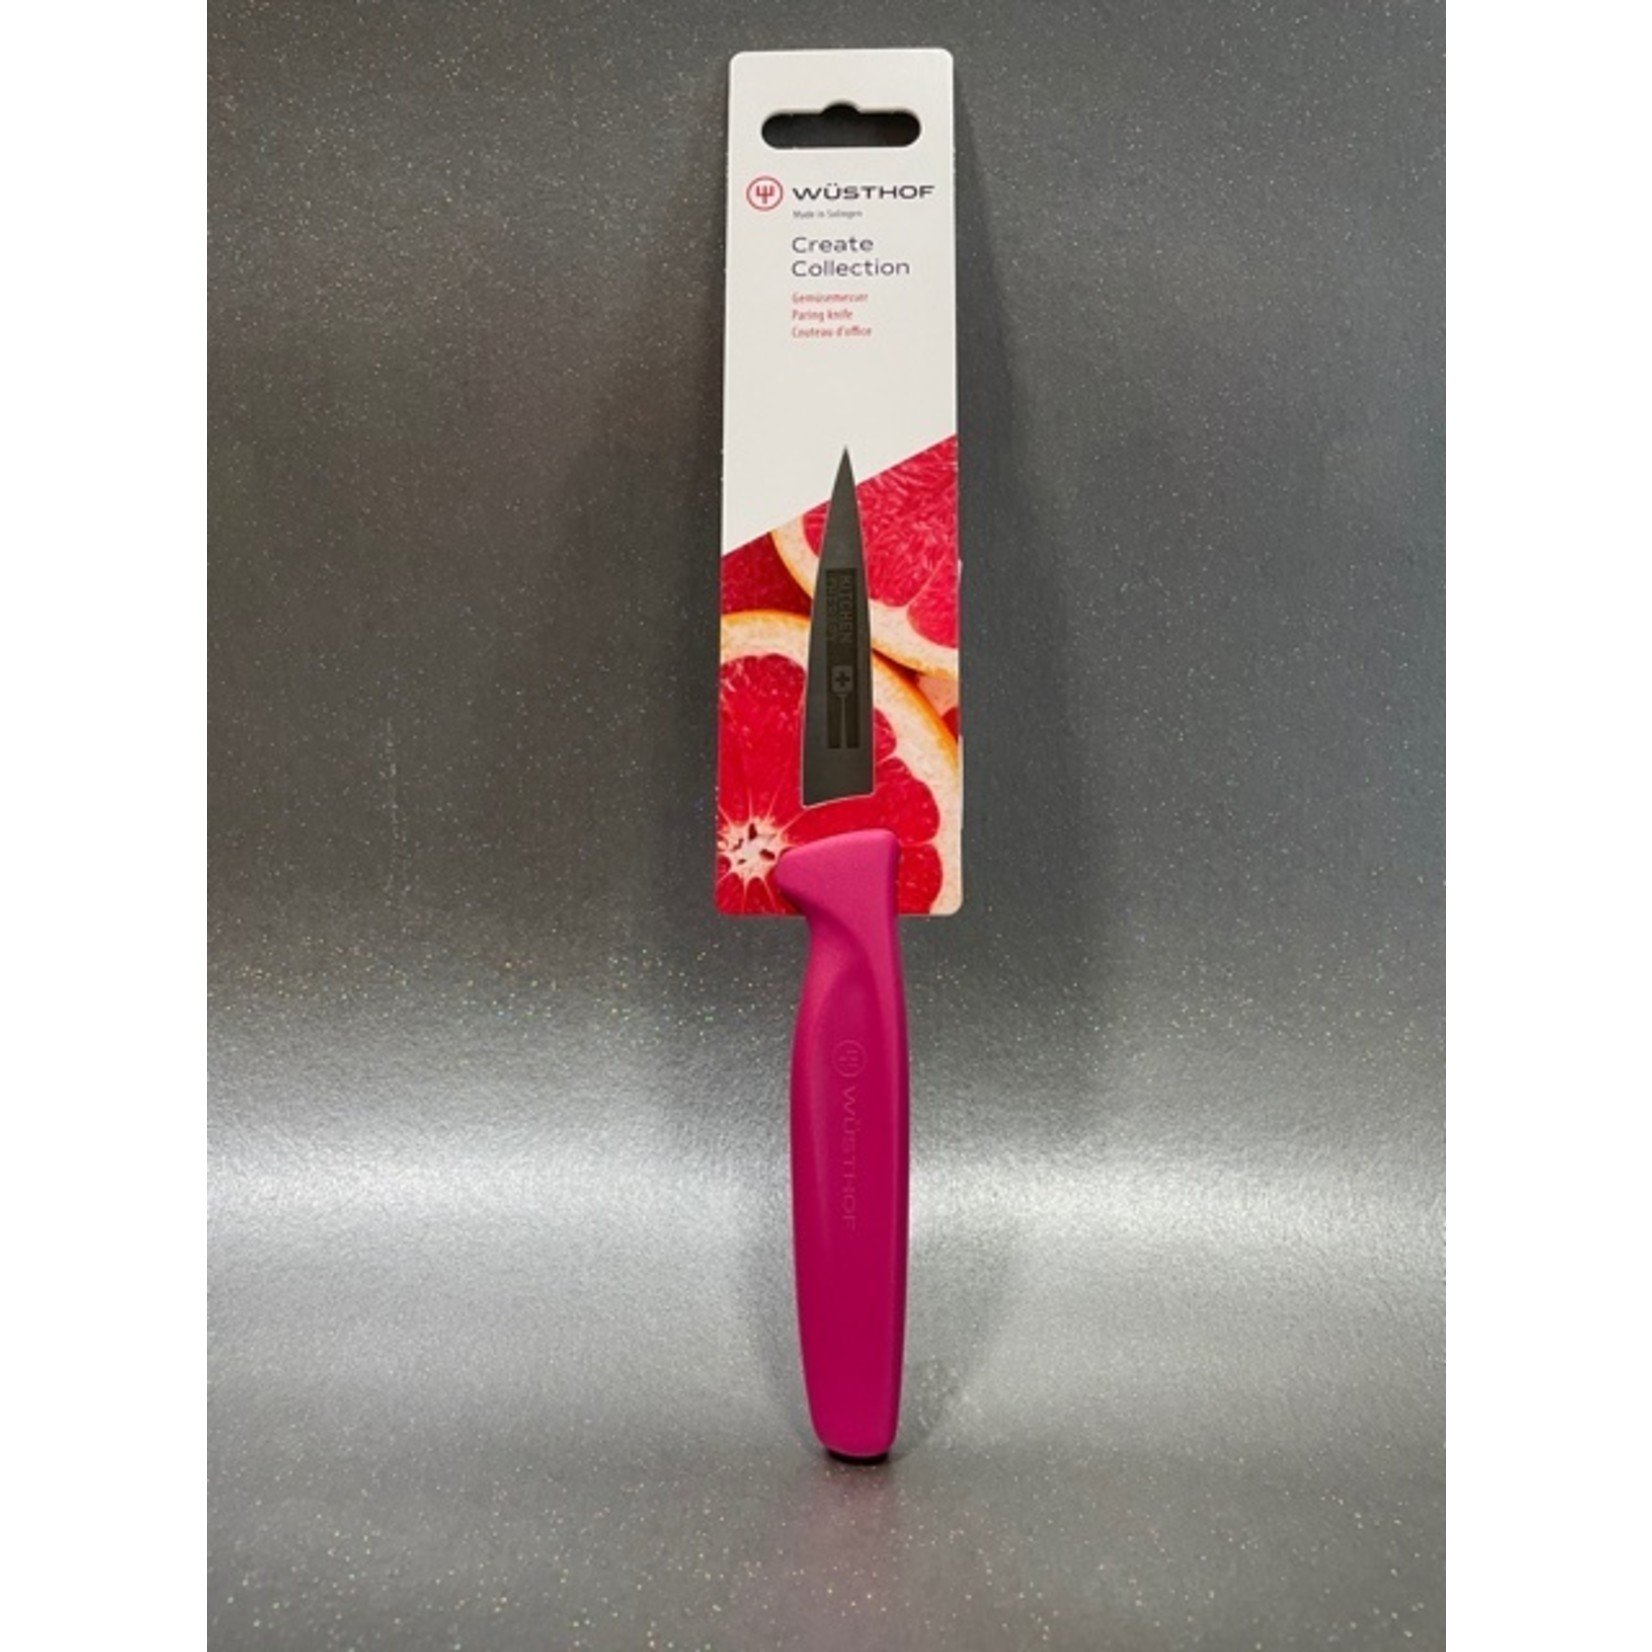 WUSTHOF WUSTHOF Kitchen Therapy Paring Knife 3" - Pink